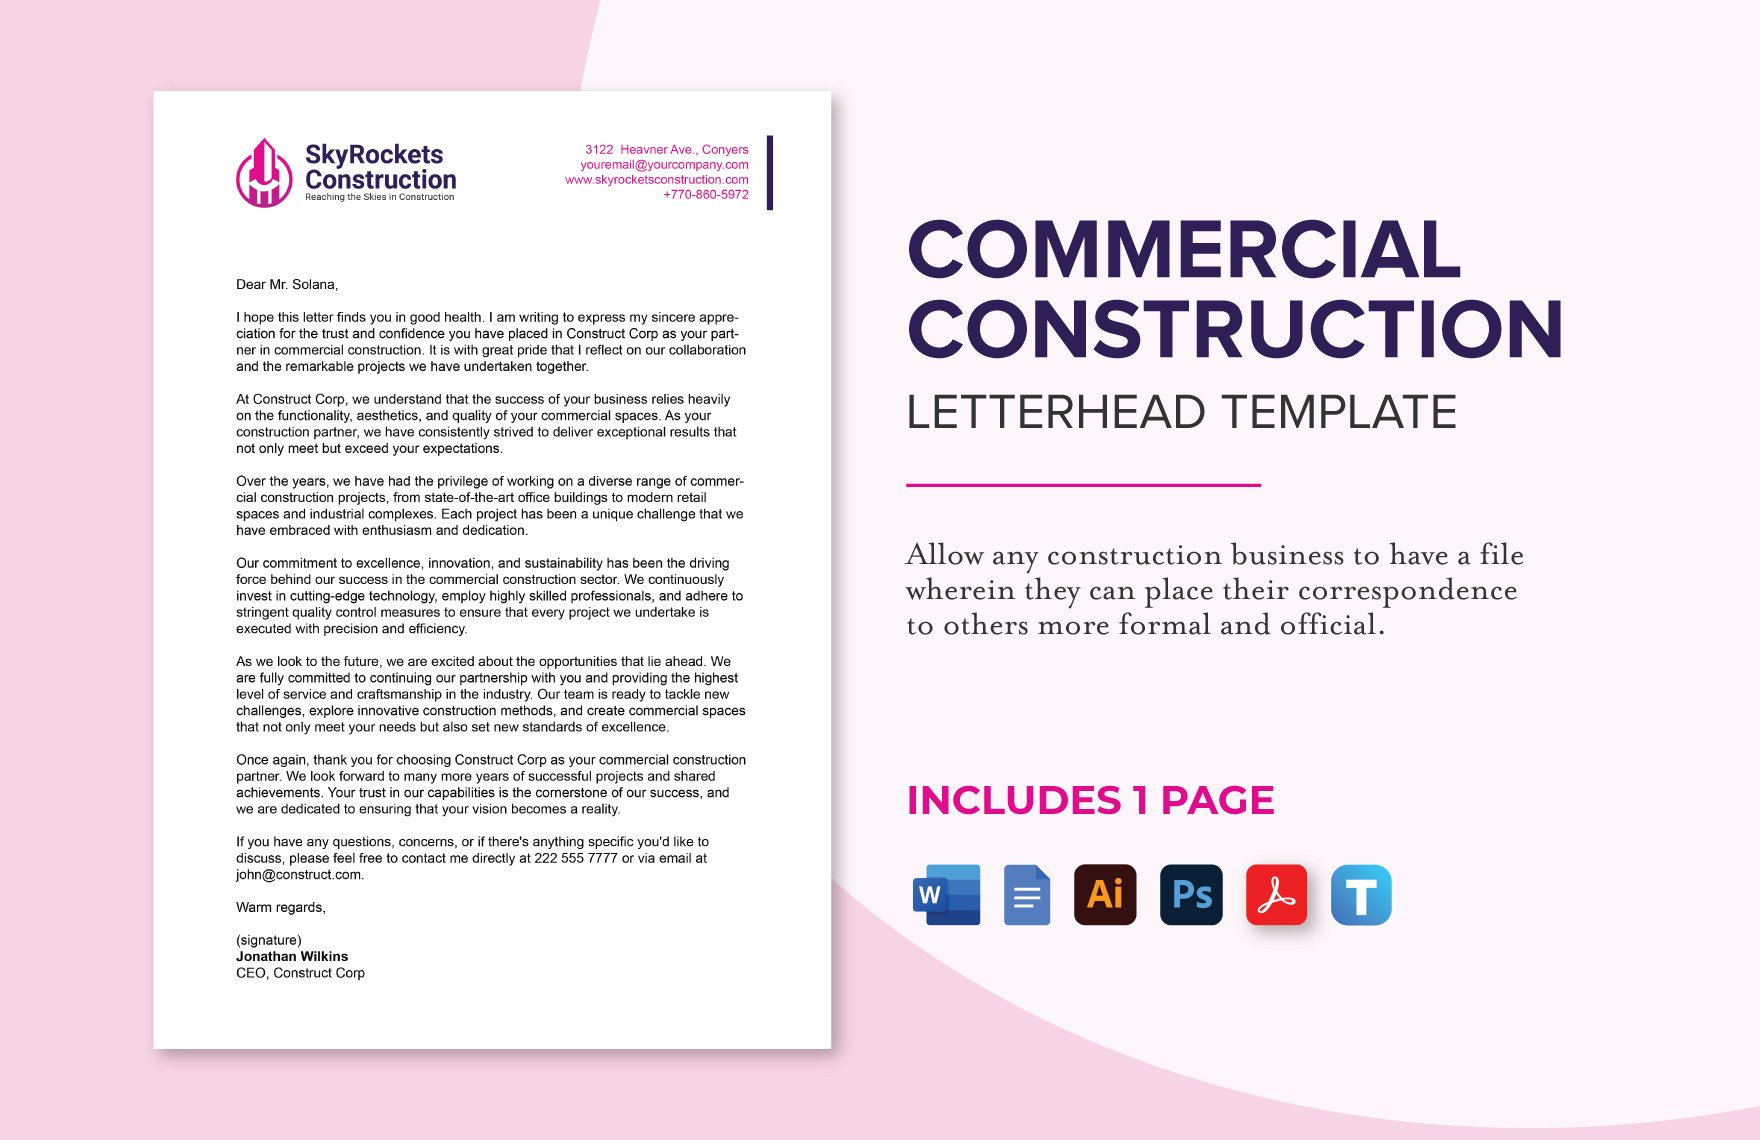 Commercial Construction Letterhead Template